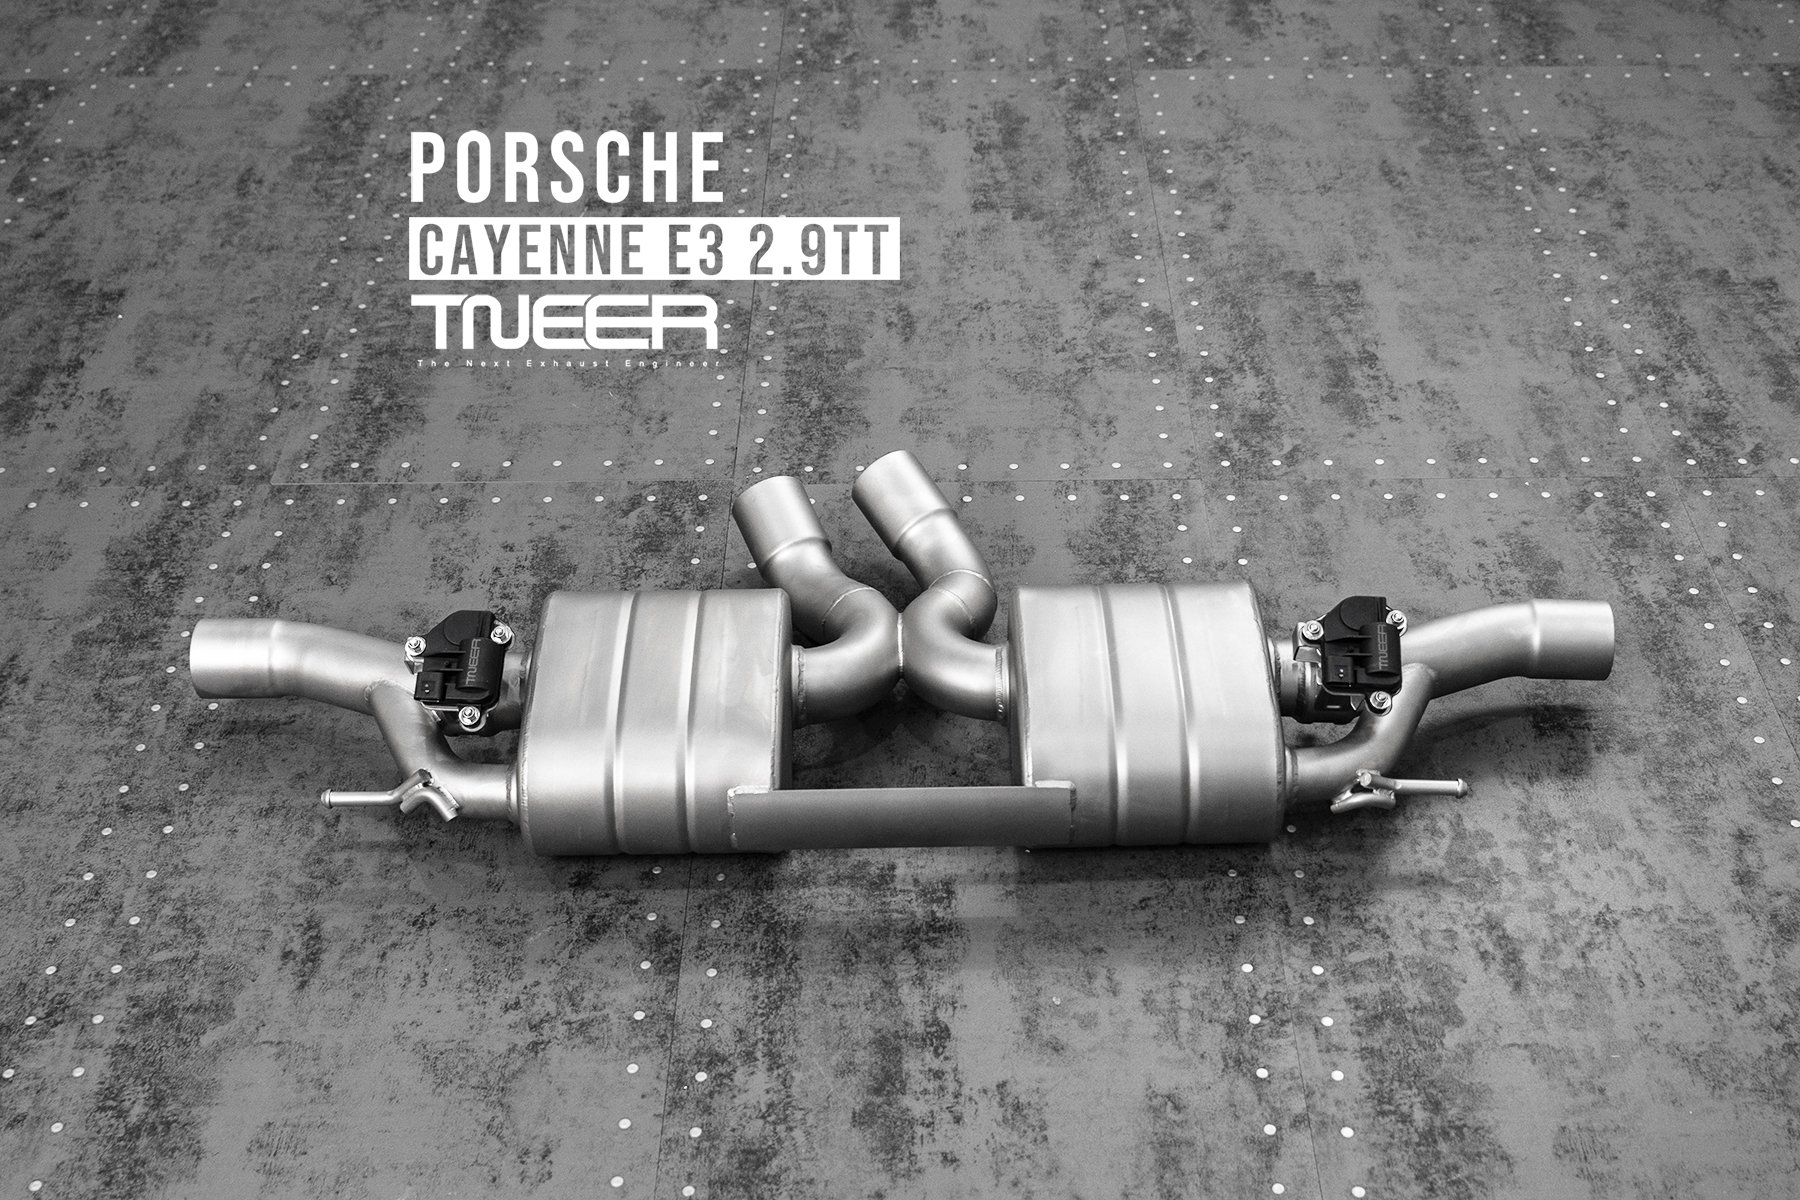 Porsche Cayenne S/Coupe S (E3) 2.9TT TNEER Performance Exhaust System